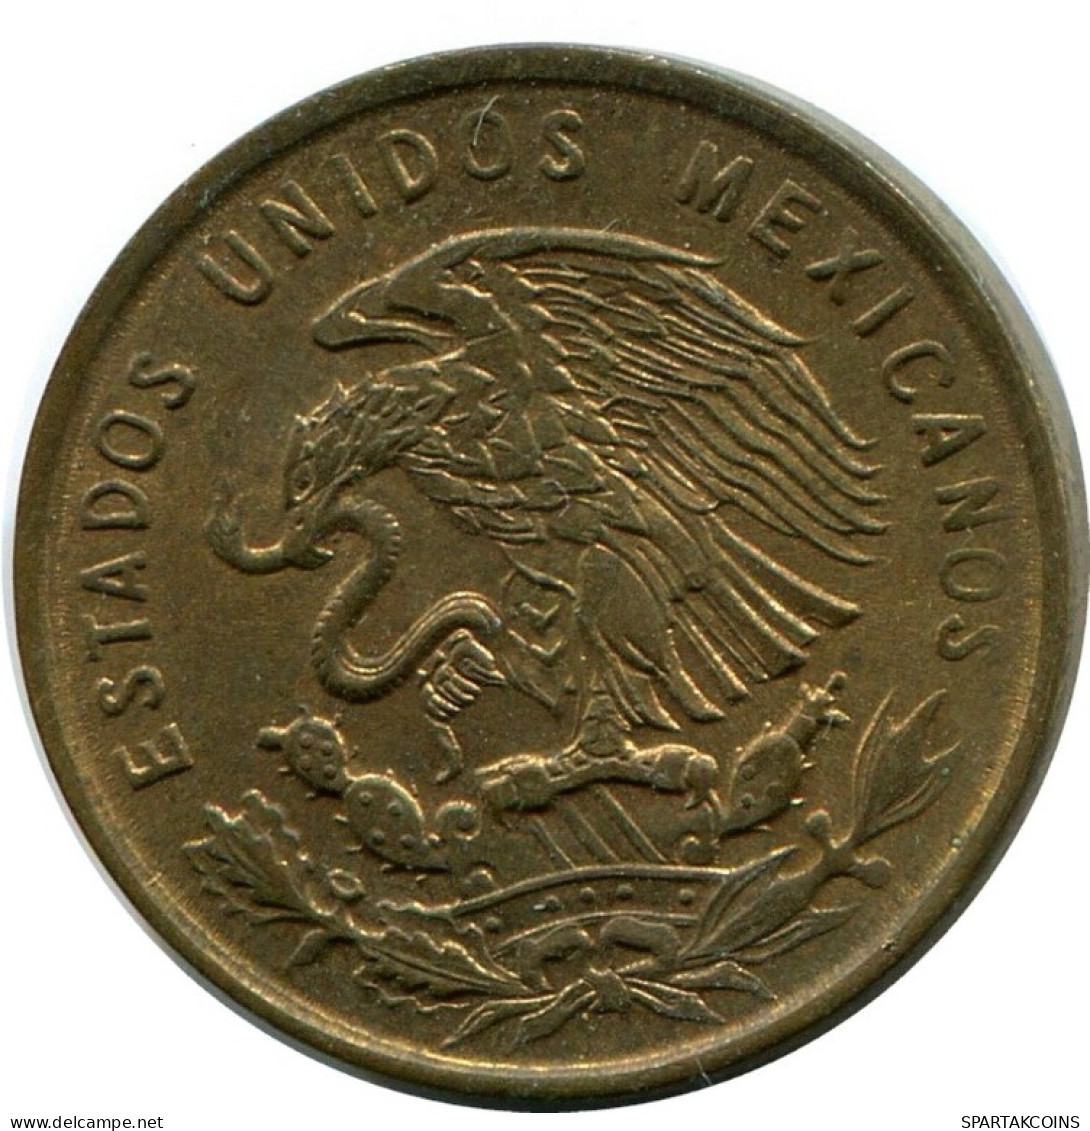 1 CENTAVO 1963 MEXICO Coin #AH398.5.U.A - Messico